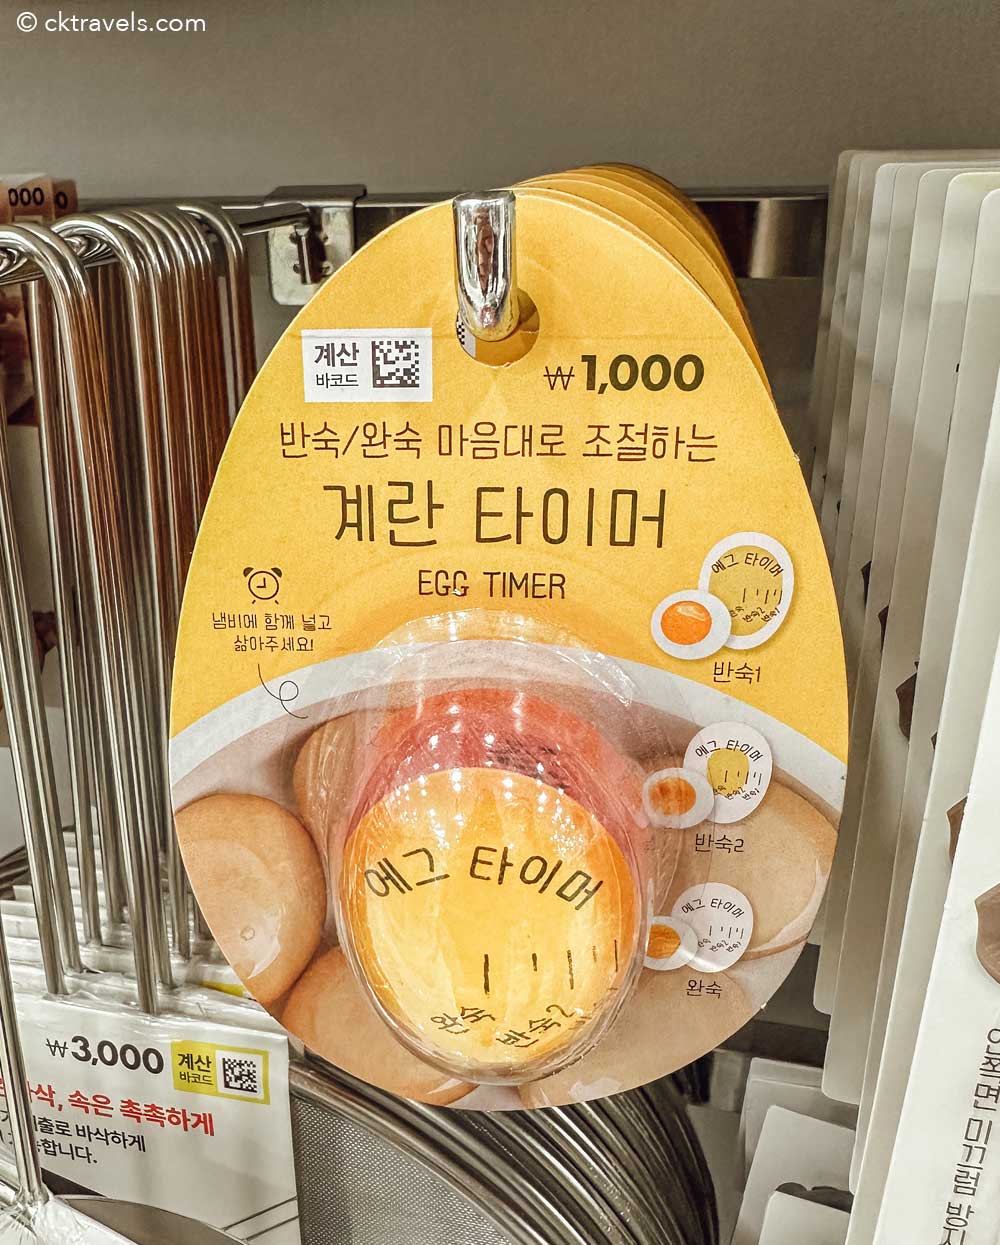 egg timer Daiso in Myeongdong Seoul 